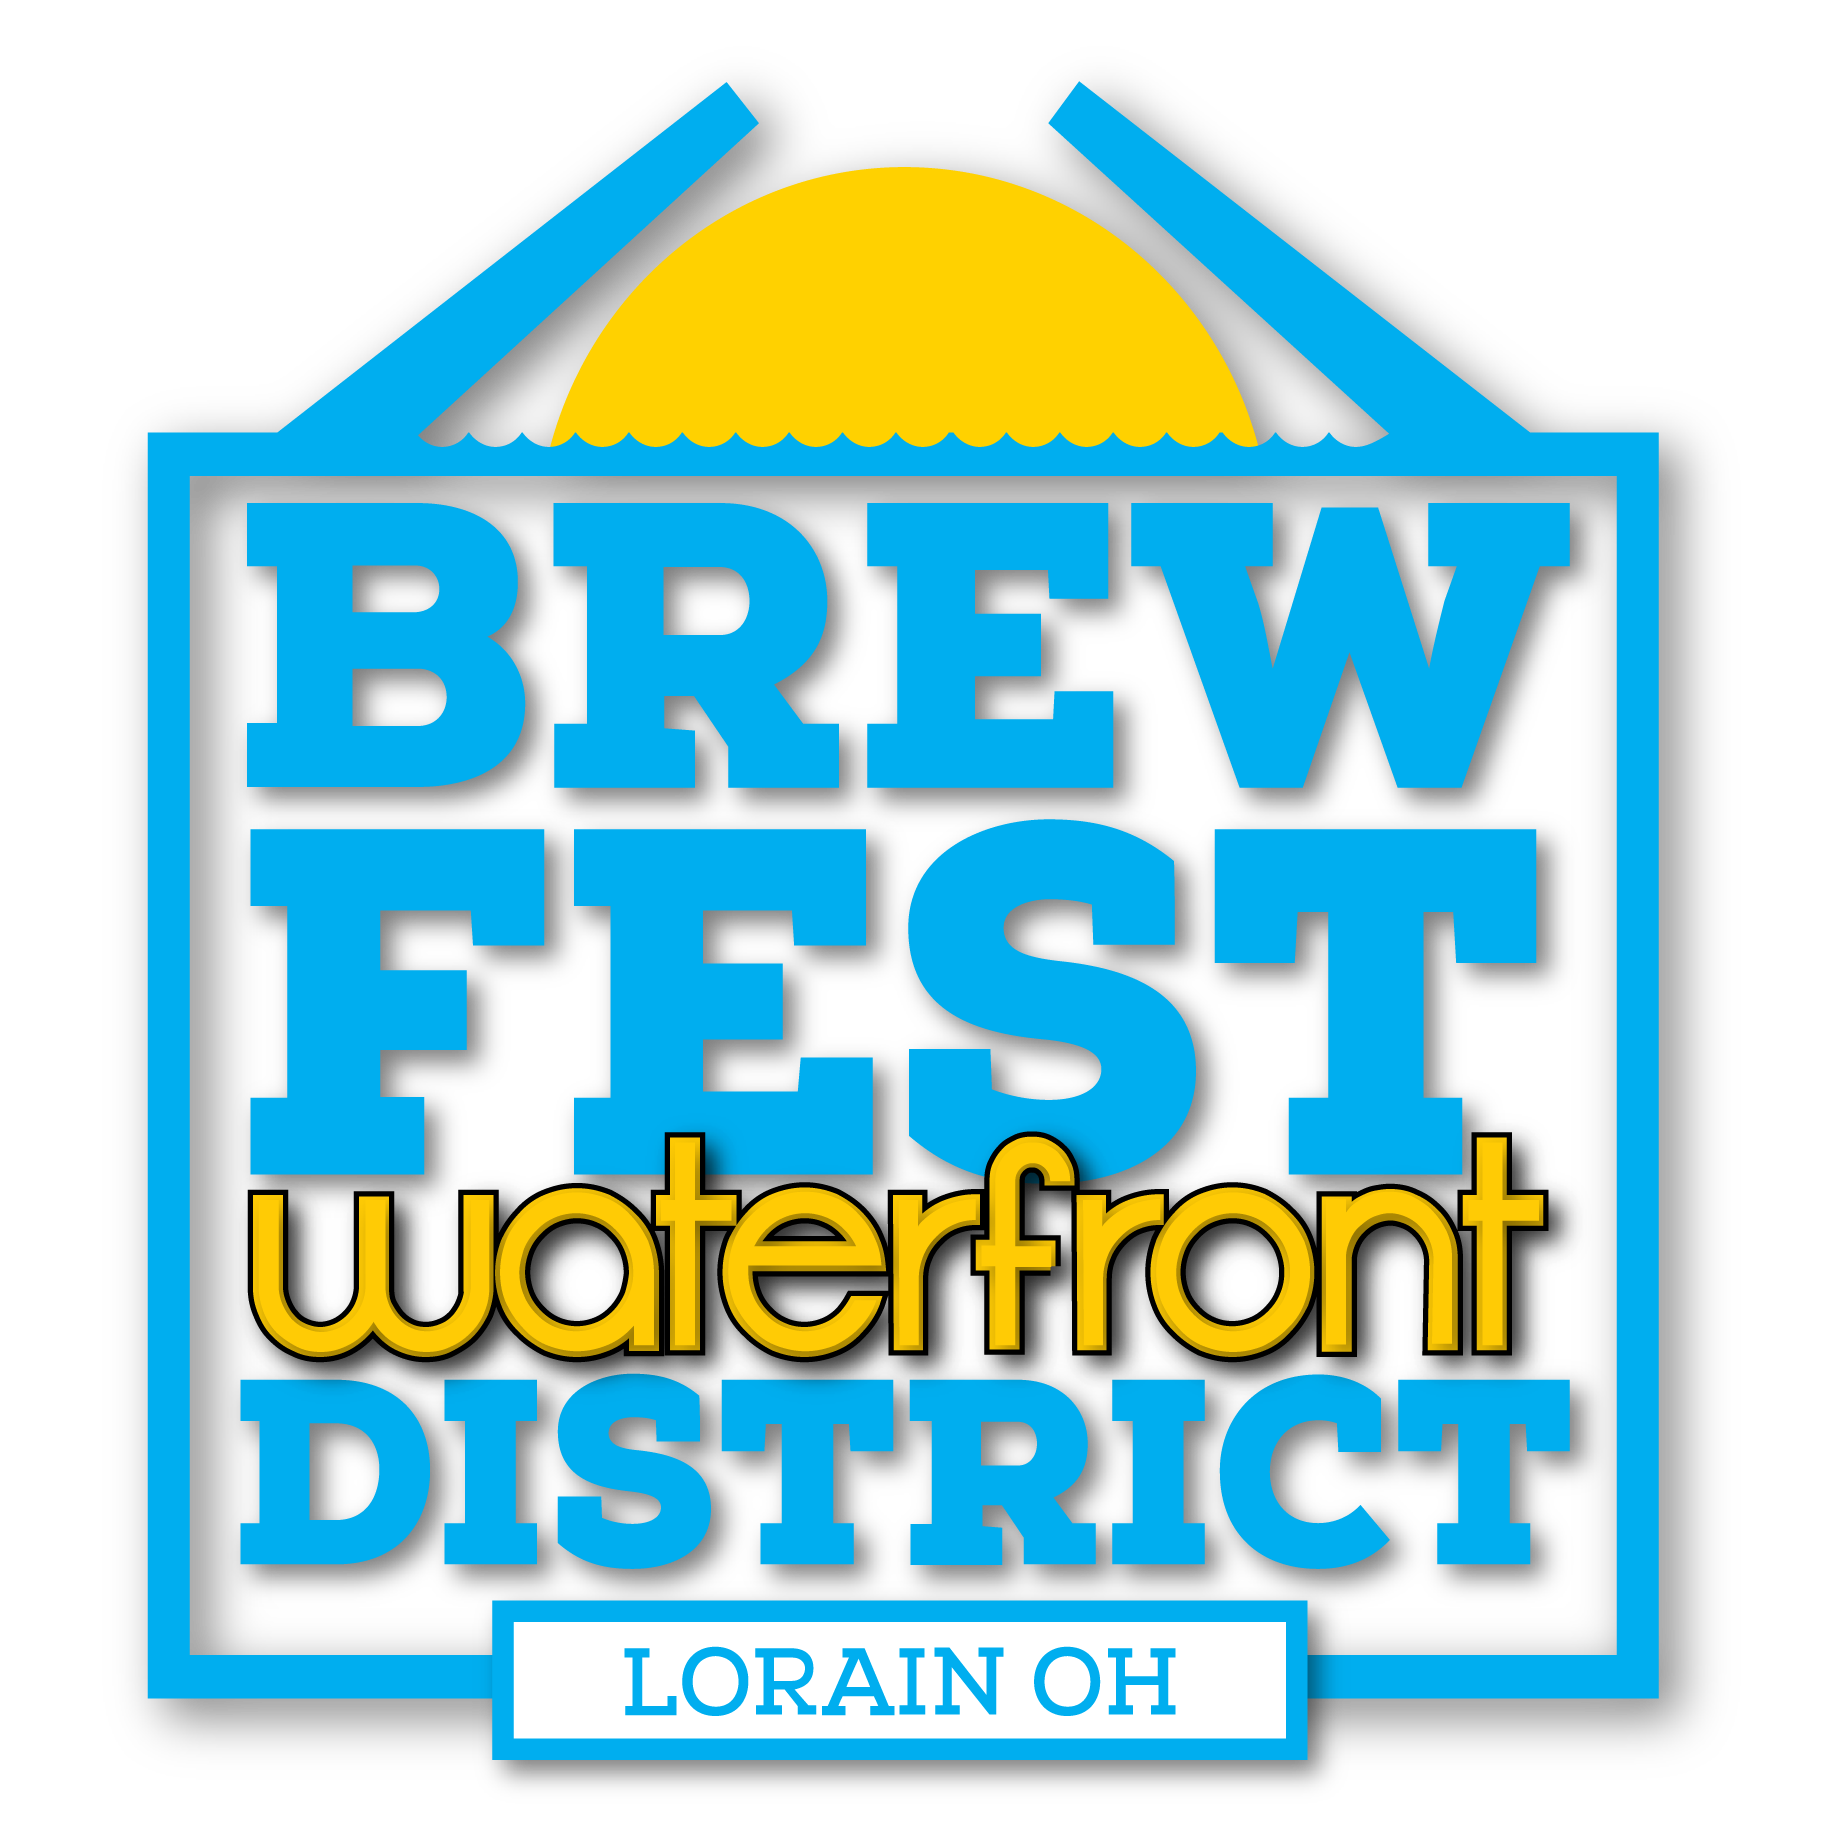 Brewfest Waterfront District